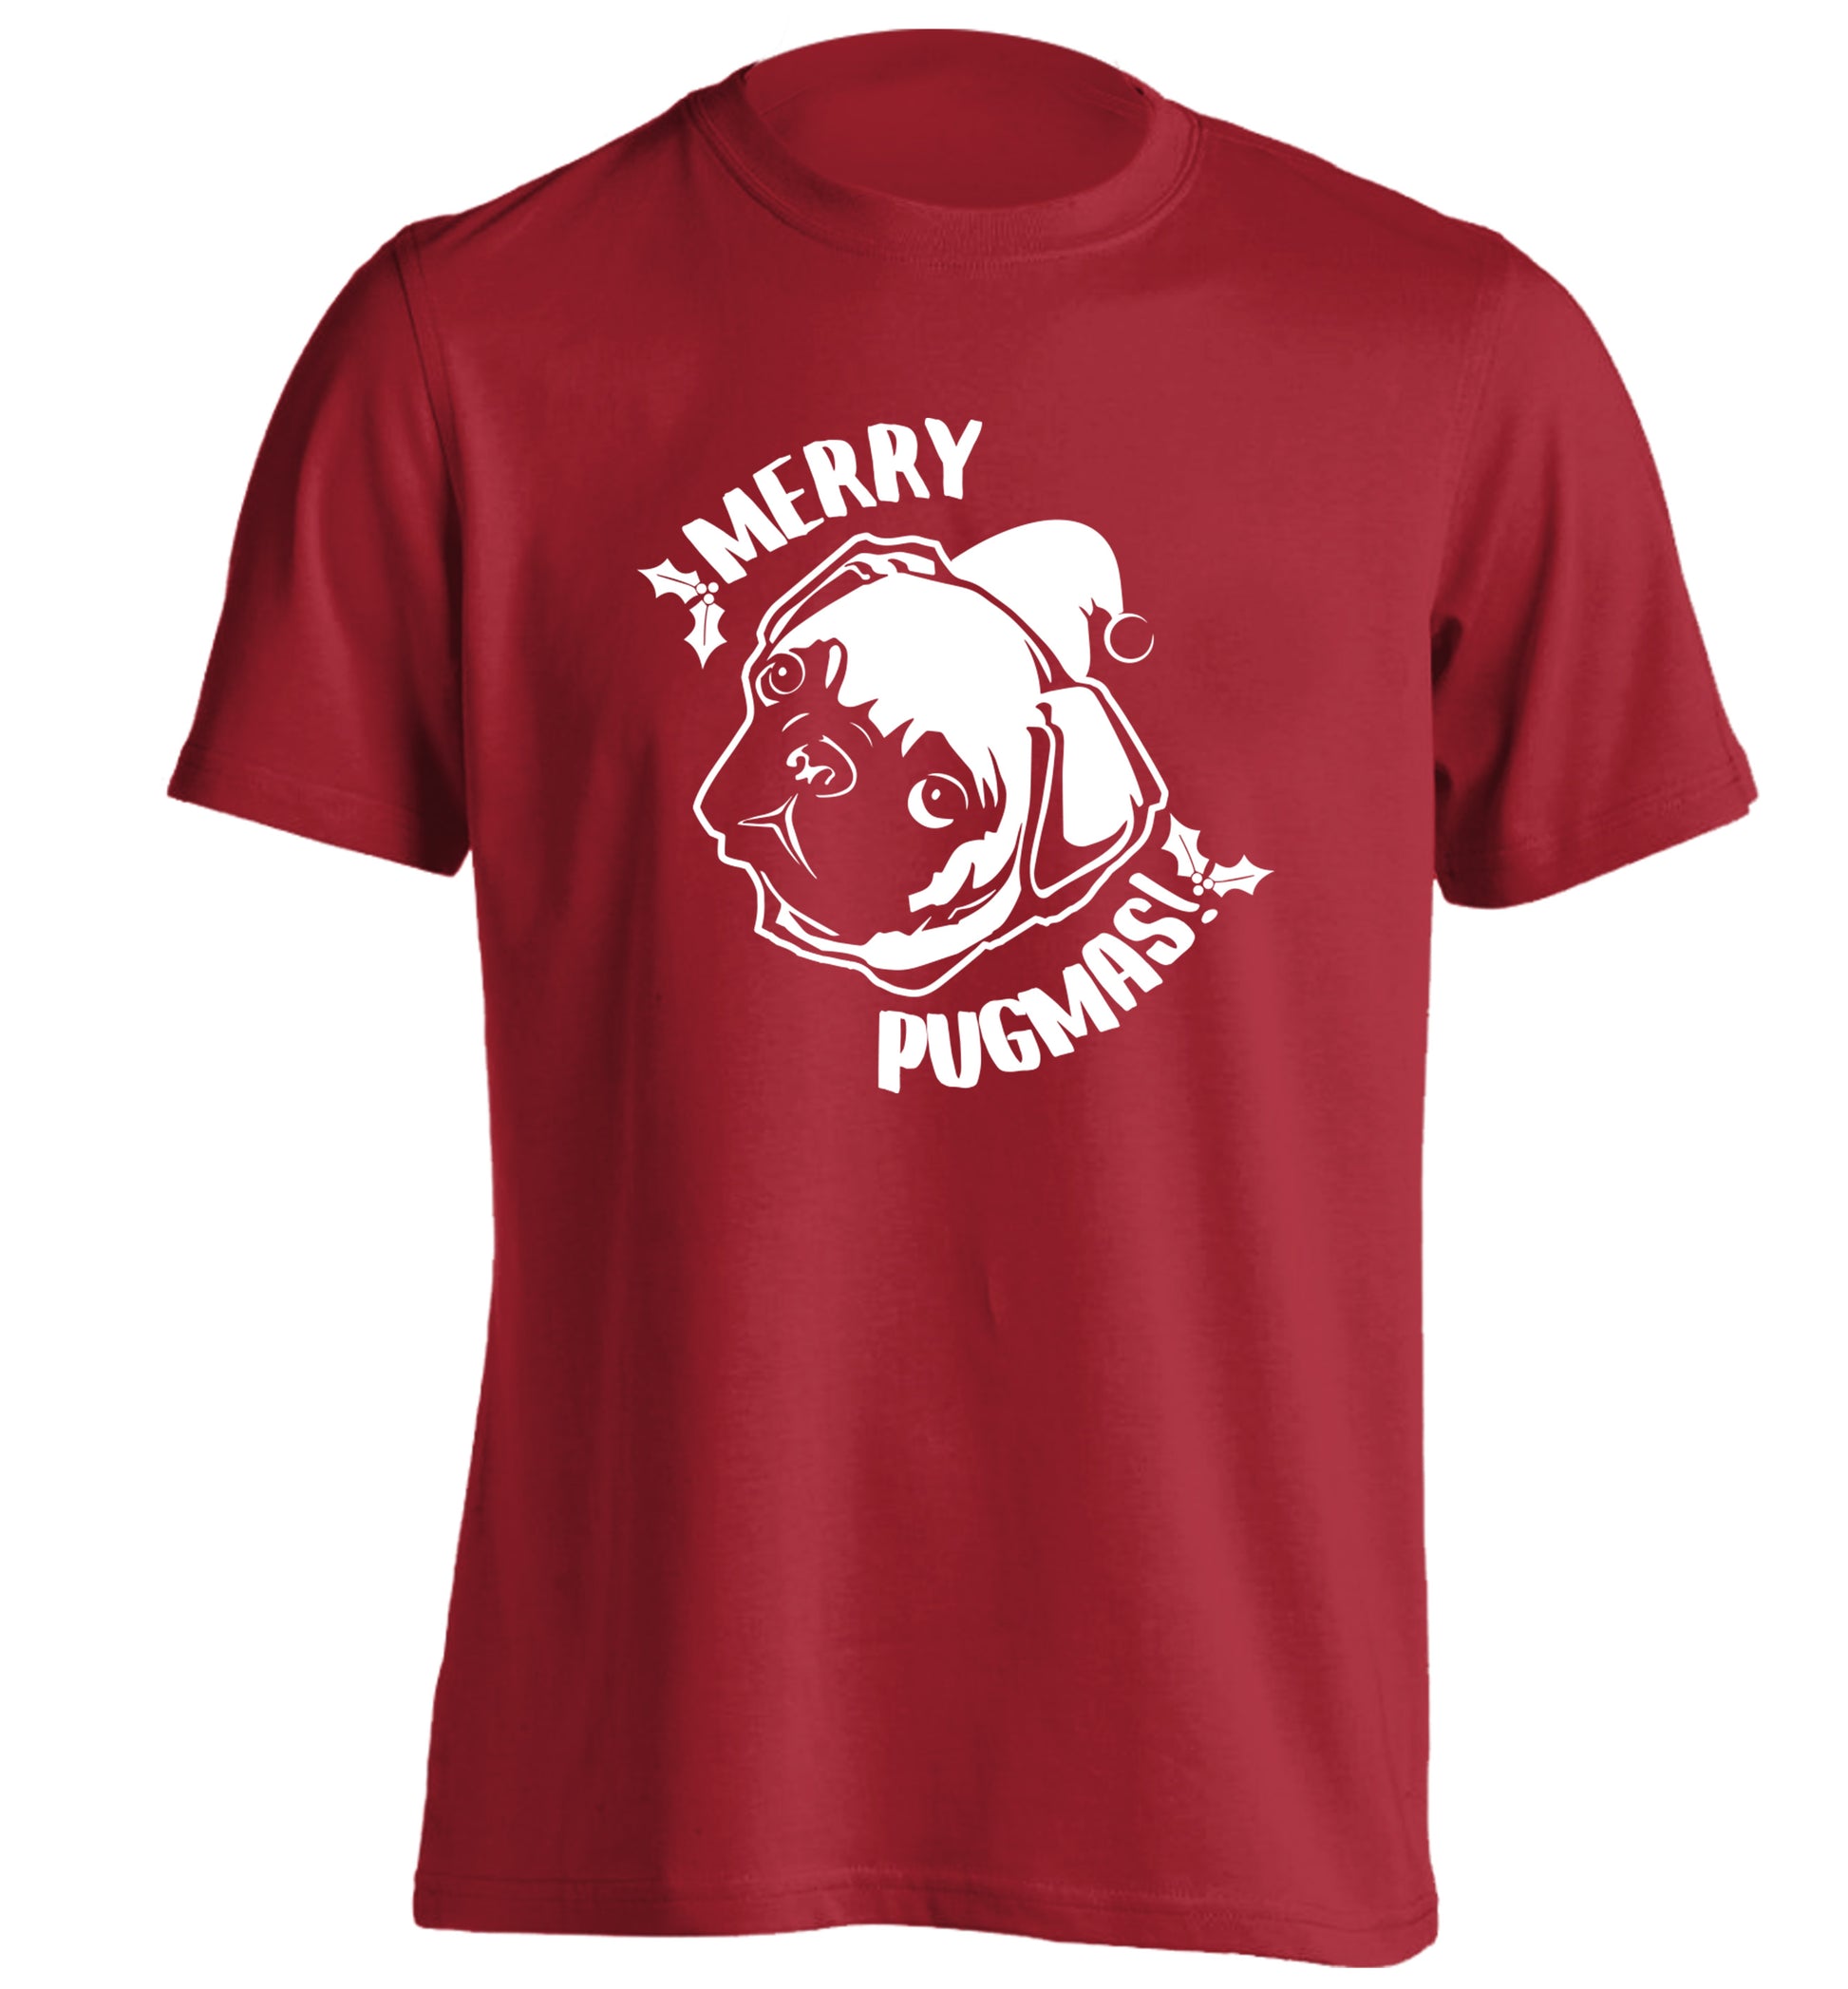 Merry Pugmas adults unisex red Tshirt 2XL